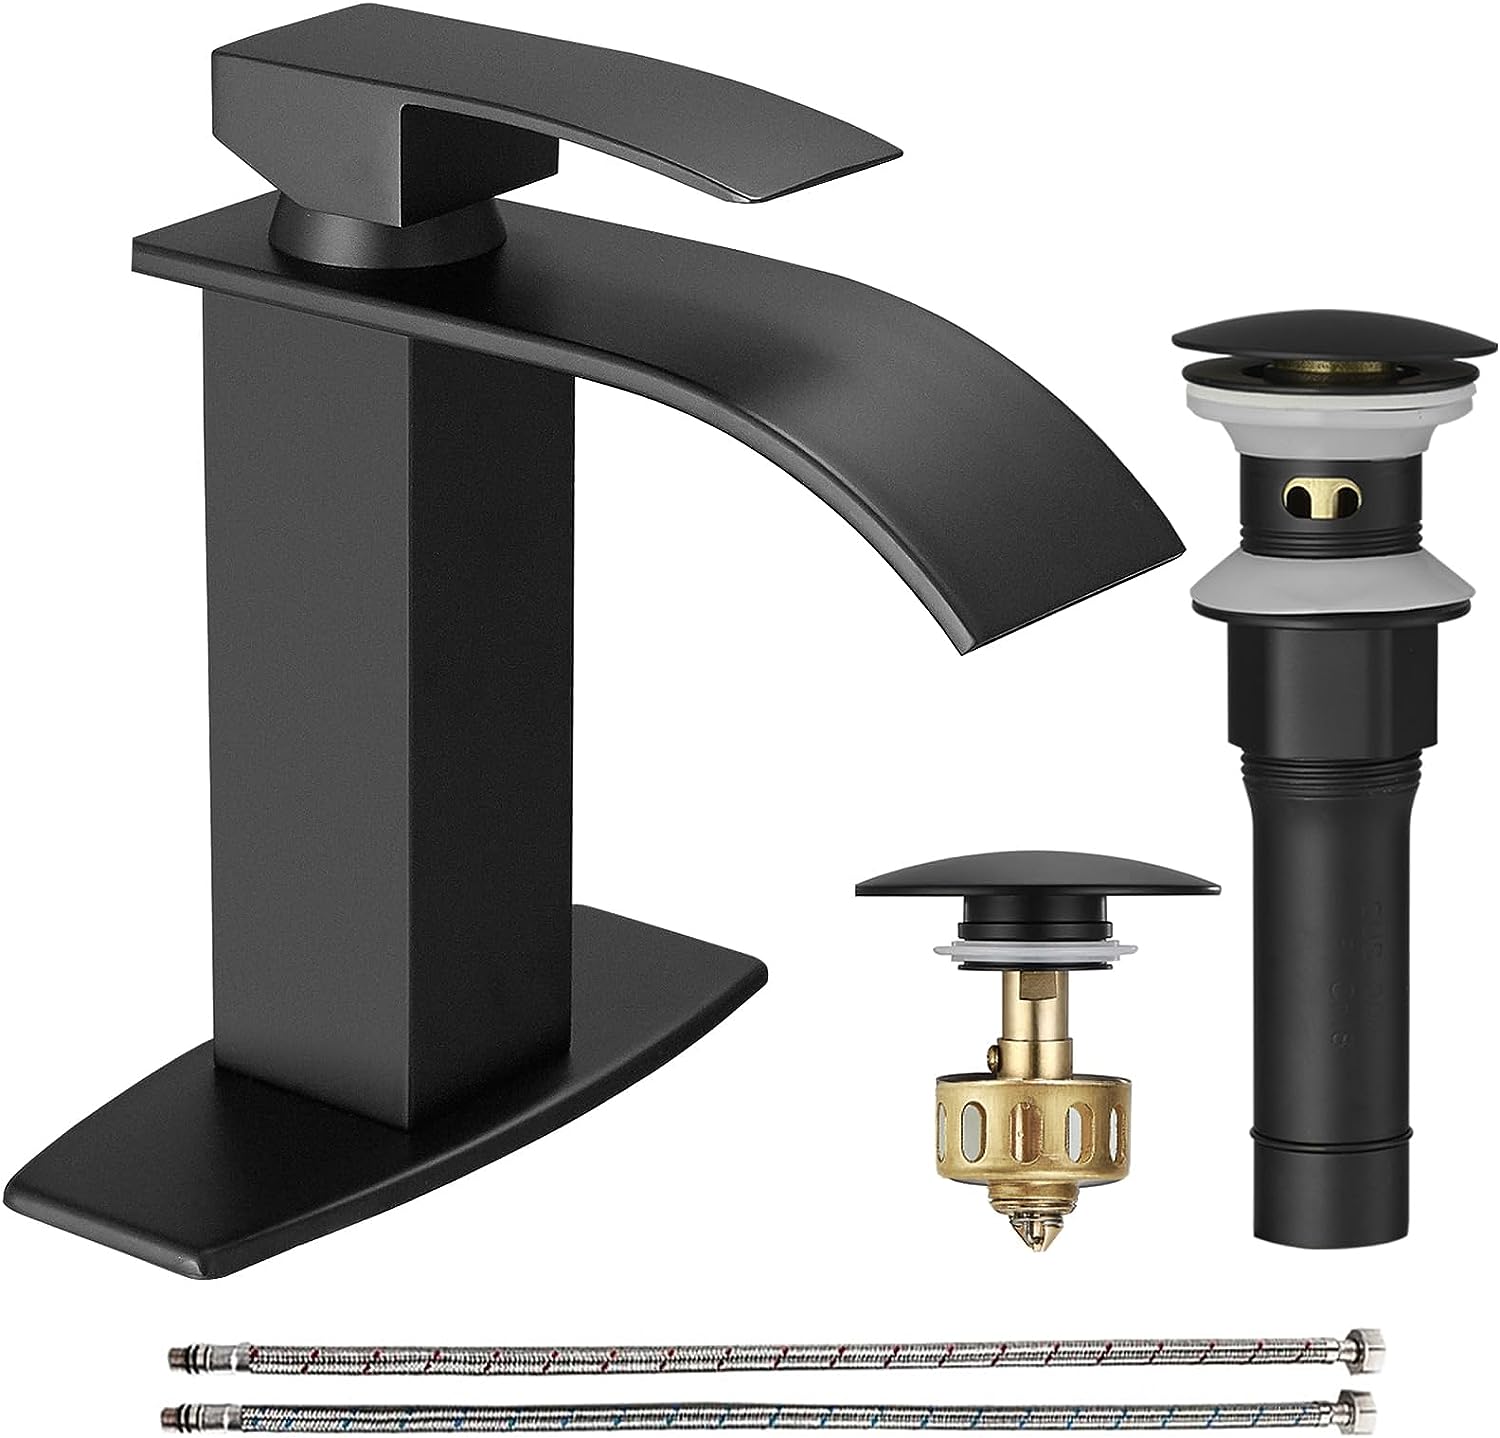 Hoimpro Black Waterfall Bathroom Faucet with cUPC [...]